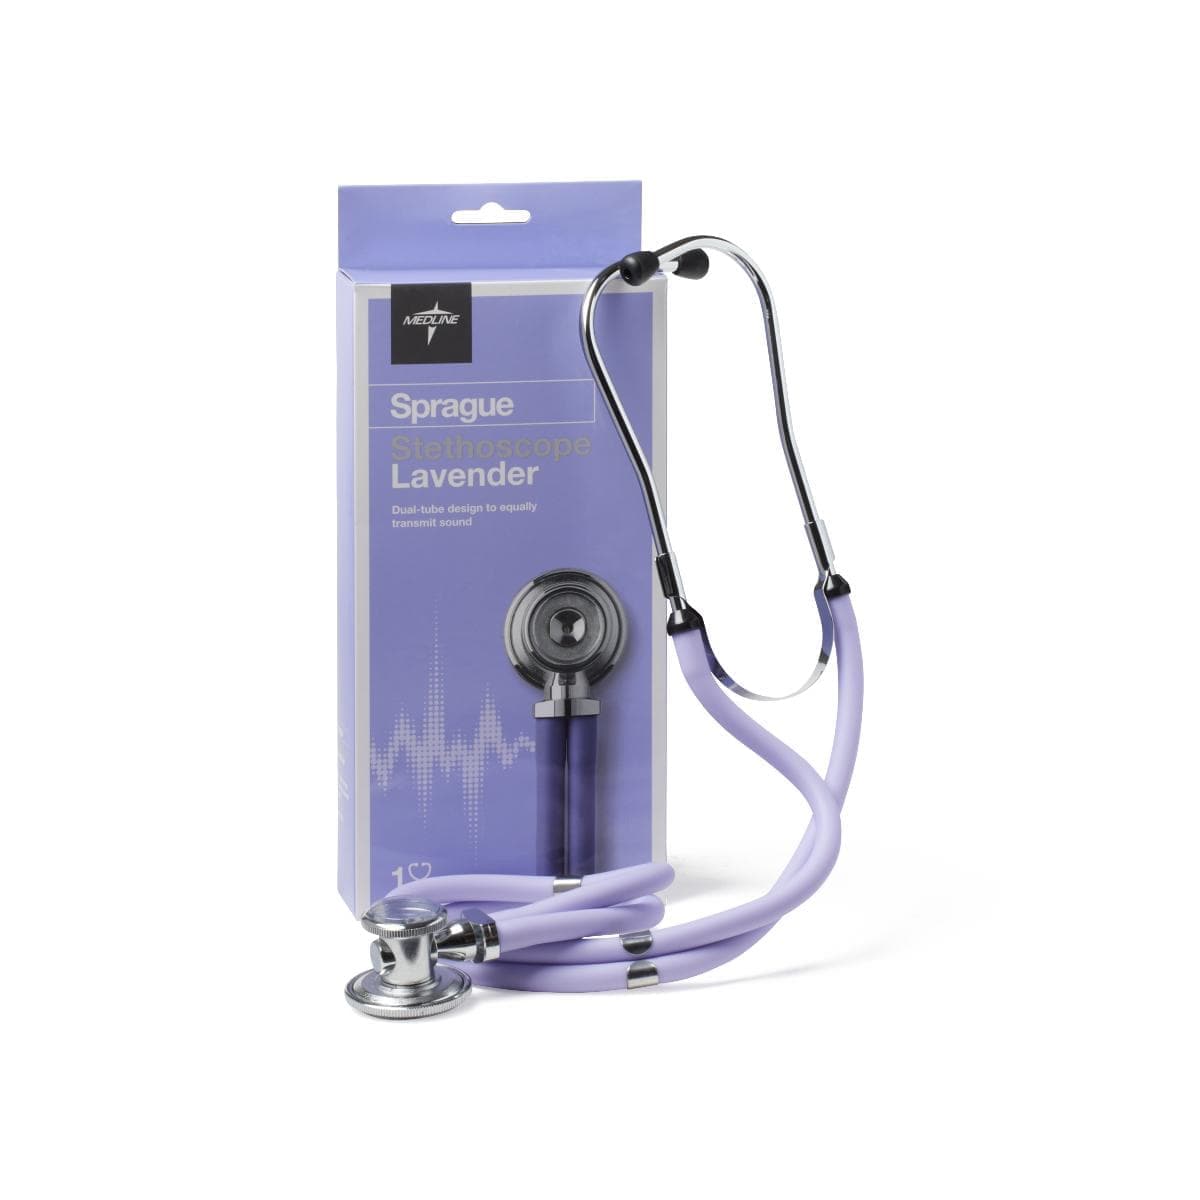 Medline Lavender Medline Sprague Rappaport Stethoscopes